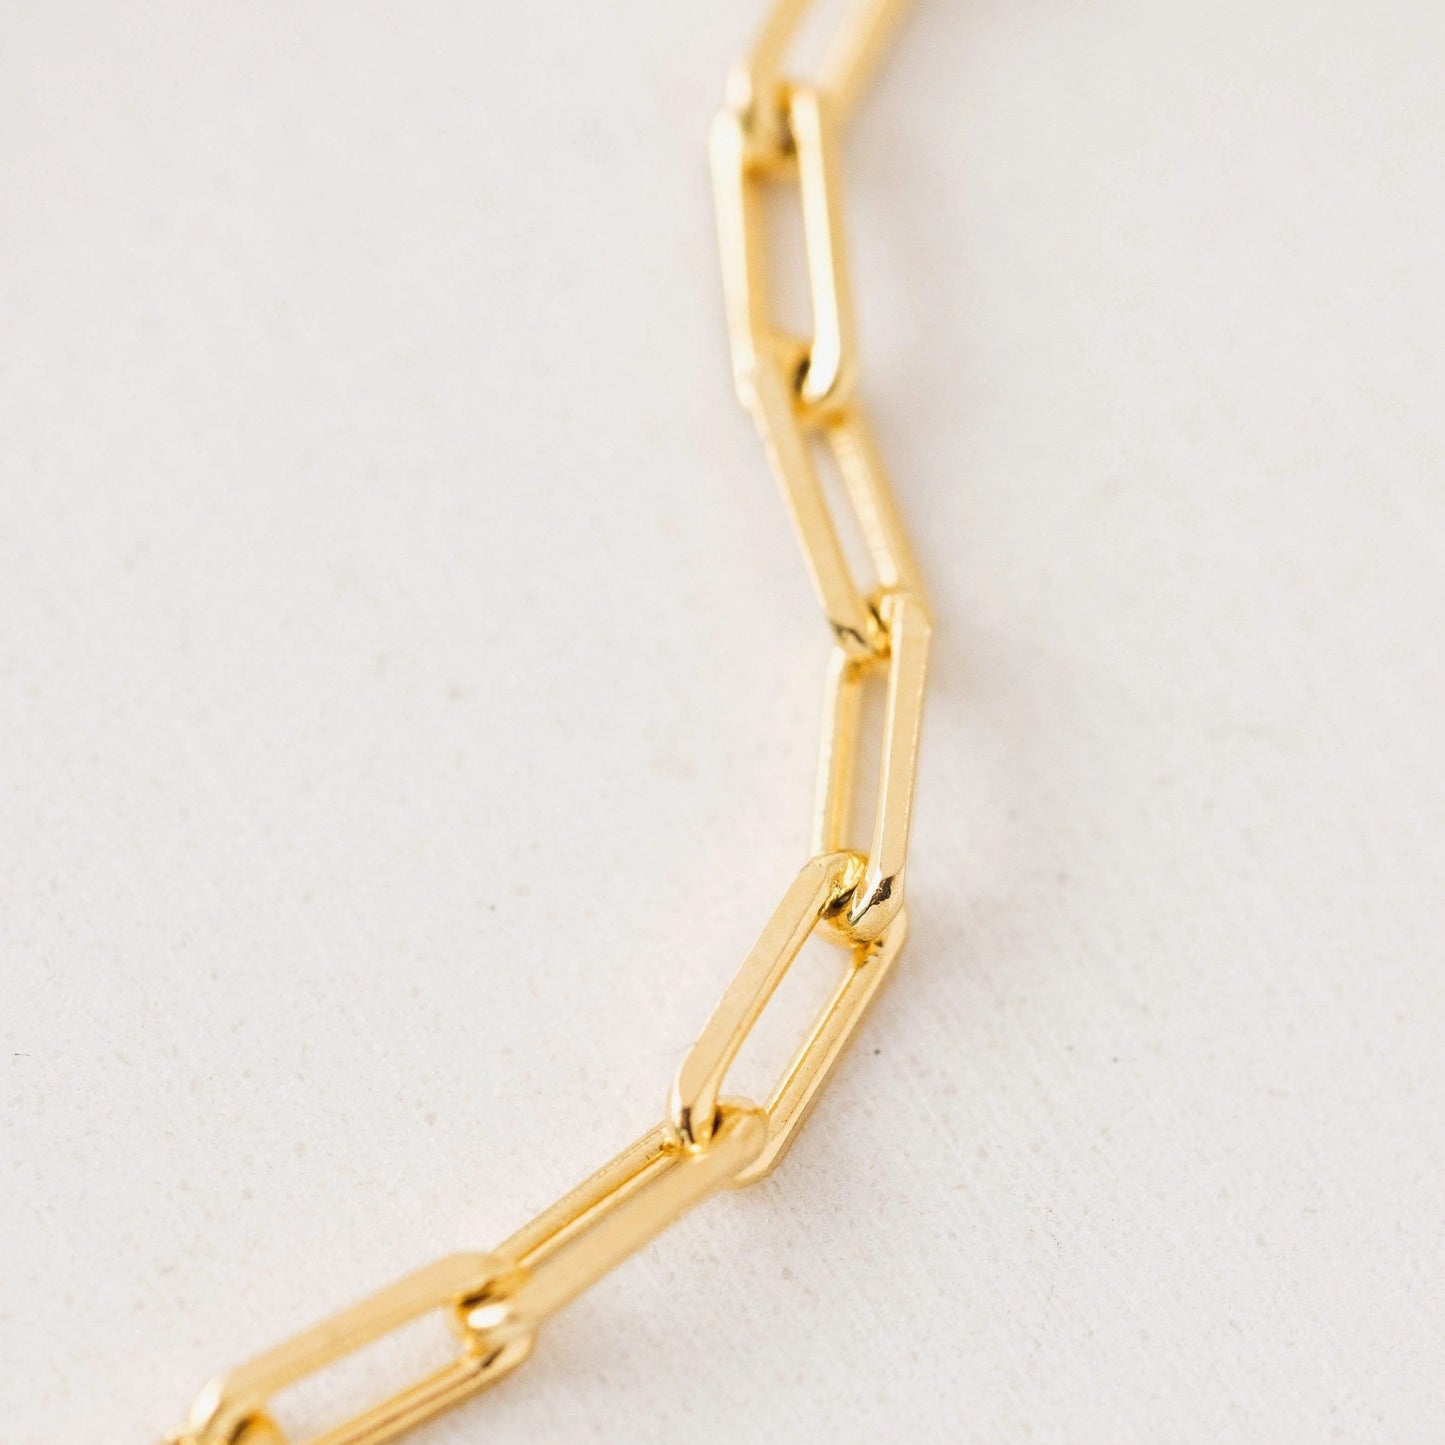 Thalassa Pearl Necklace Gold